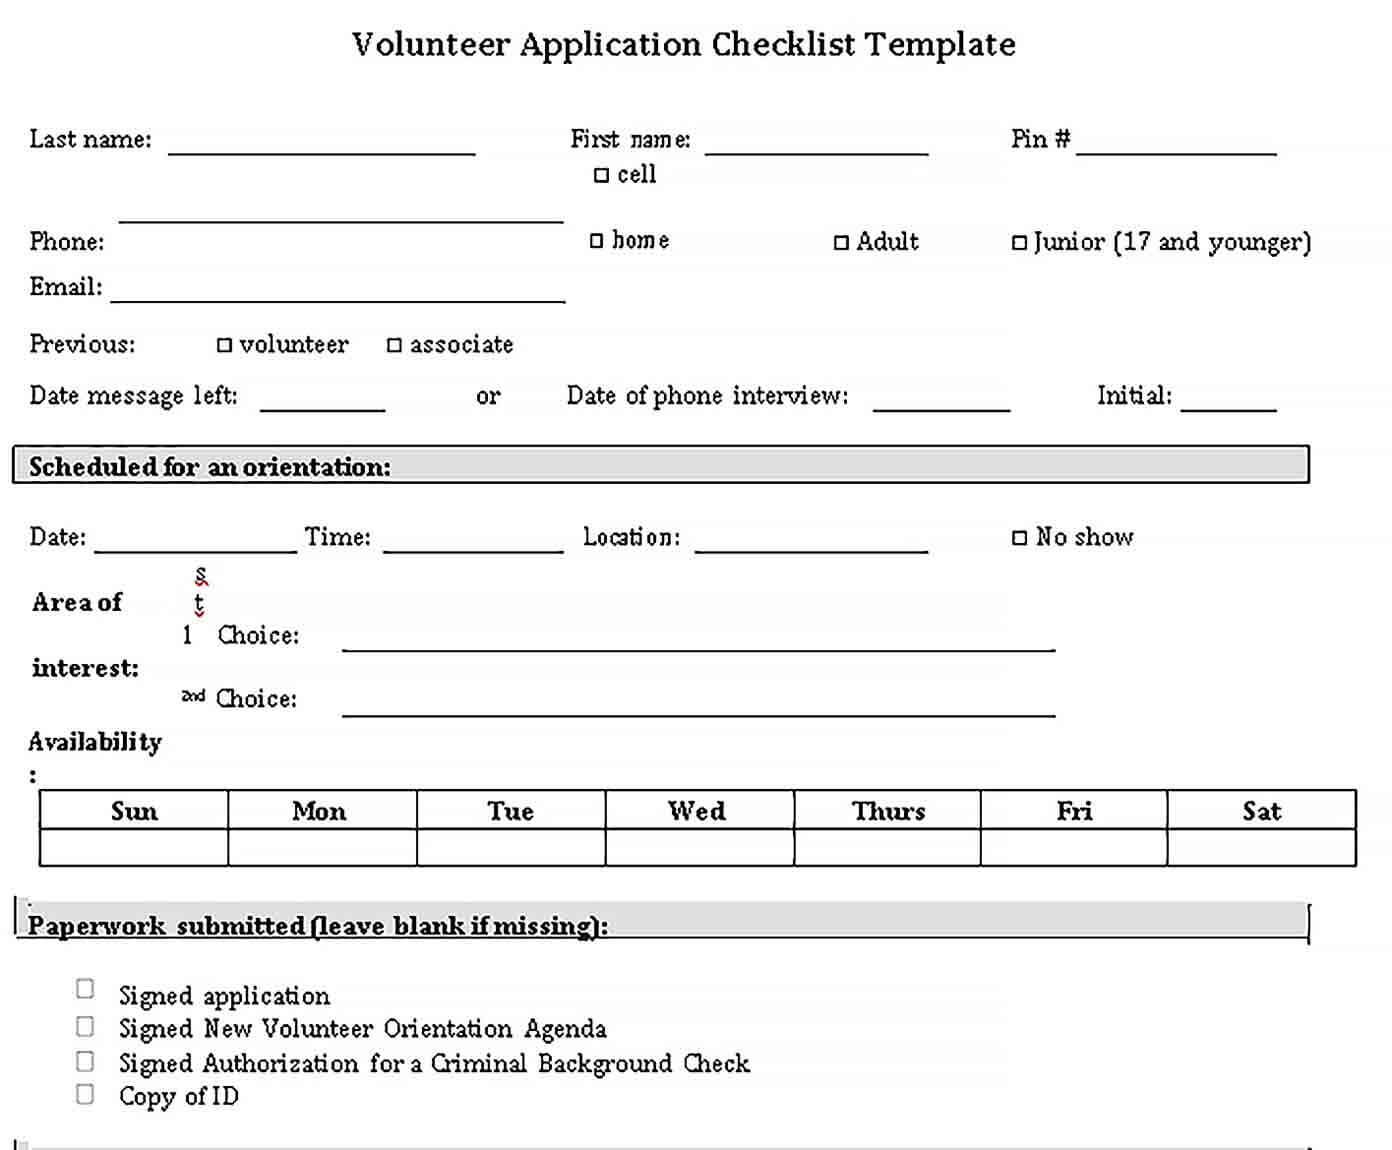 Volunteer Application Checklist